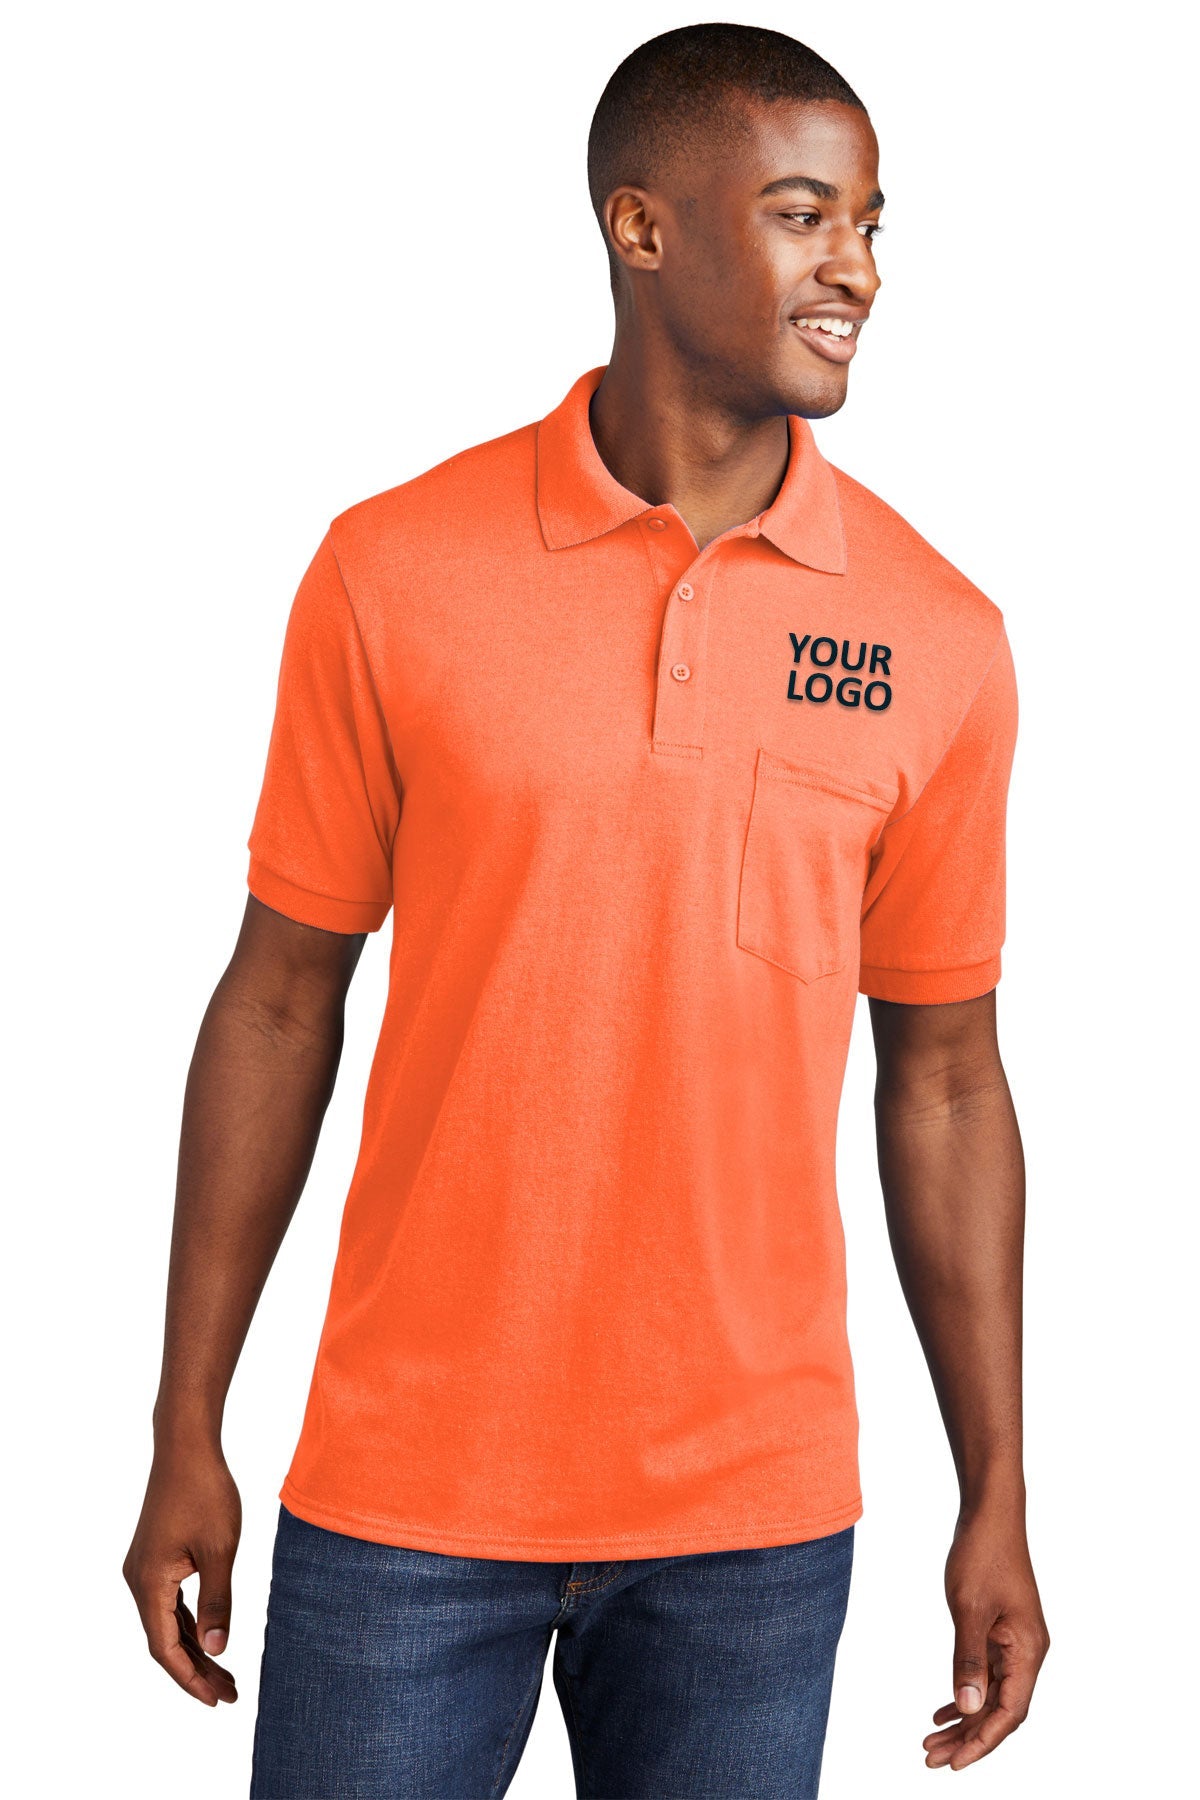 port & company safety orange kp55p polo shirts with logos